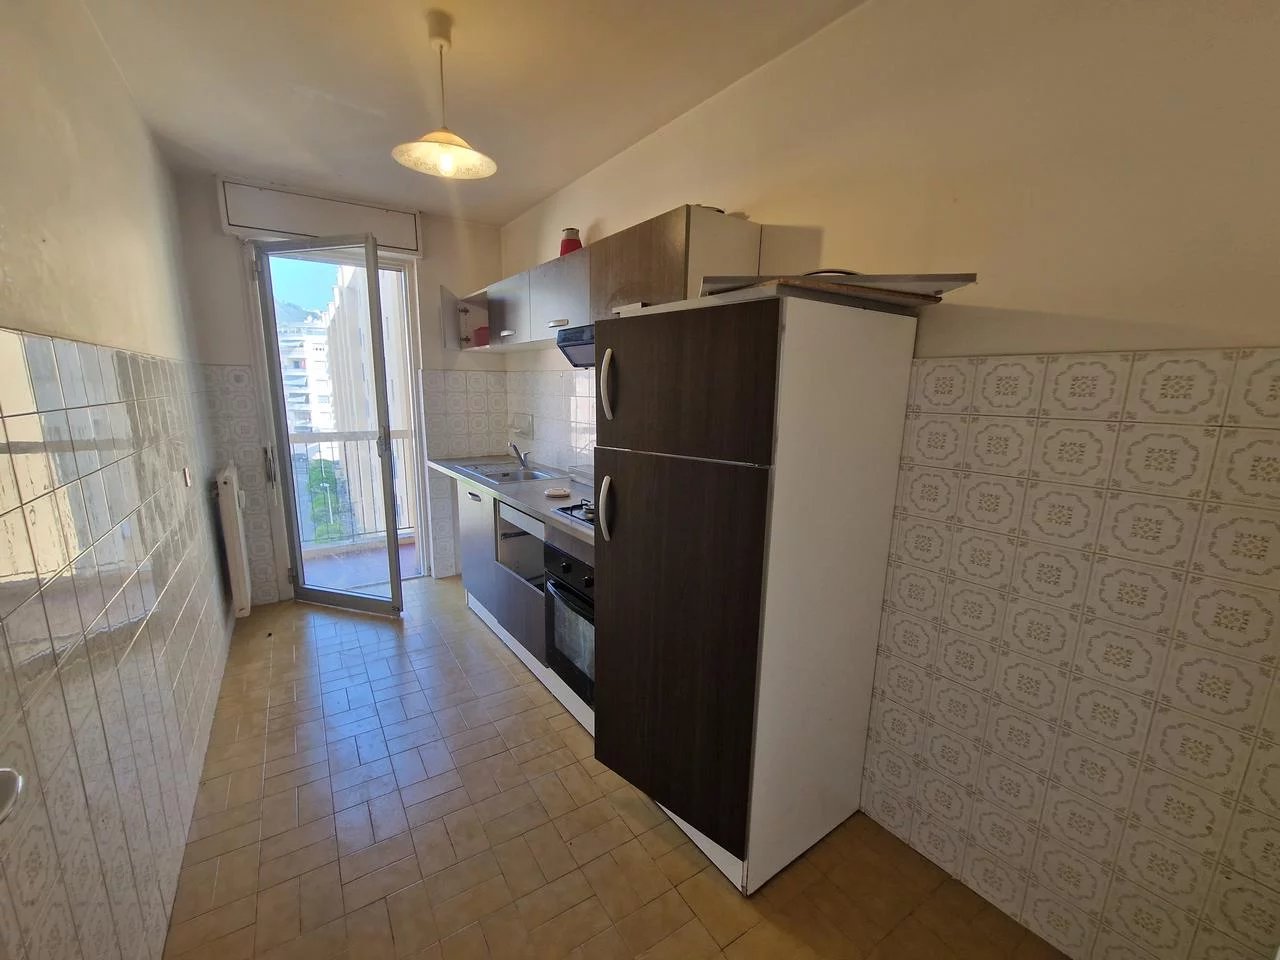 Appartement  1 Locali 32.6m2  In vendita   149 000 €